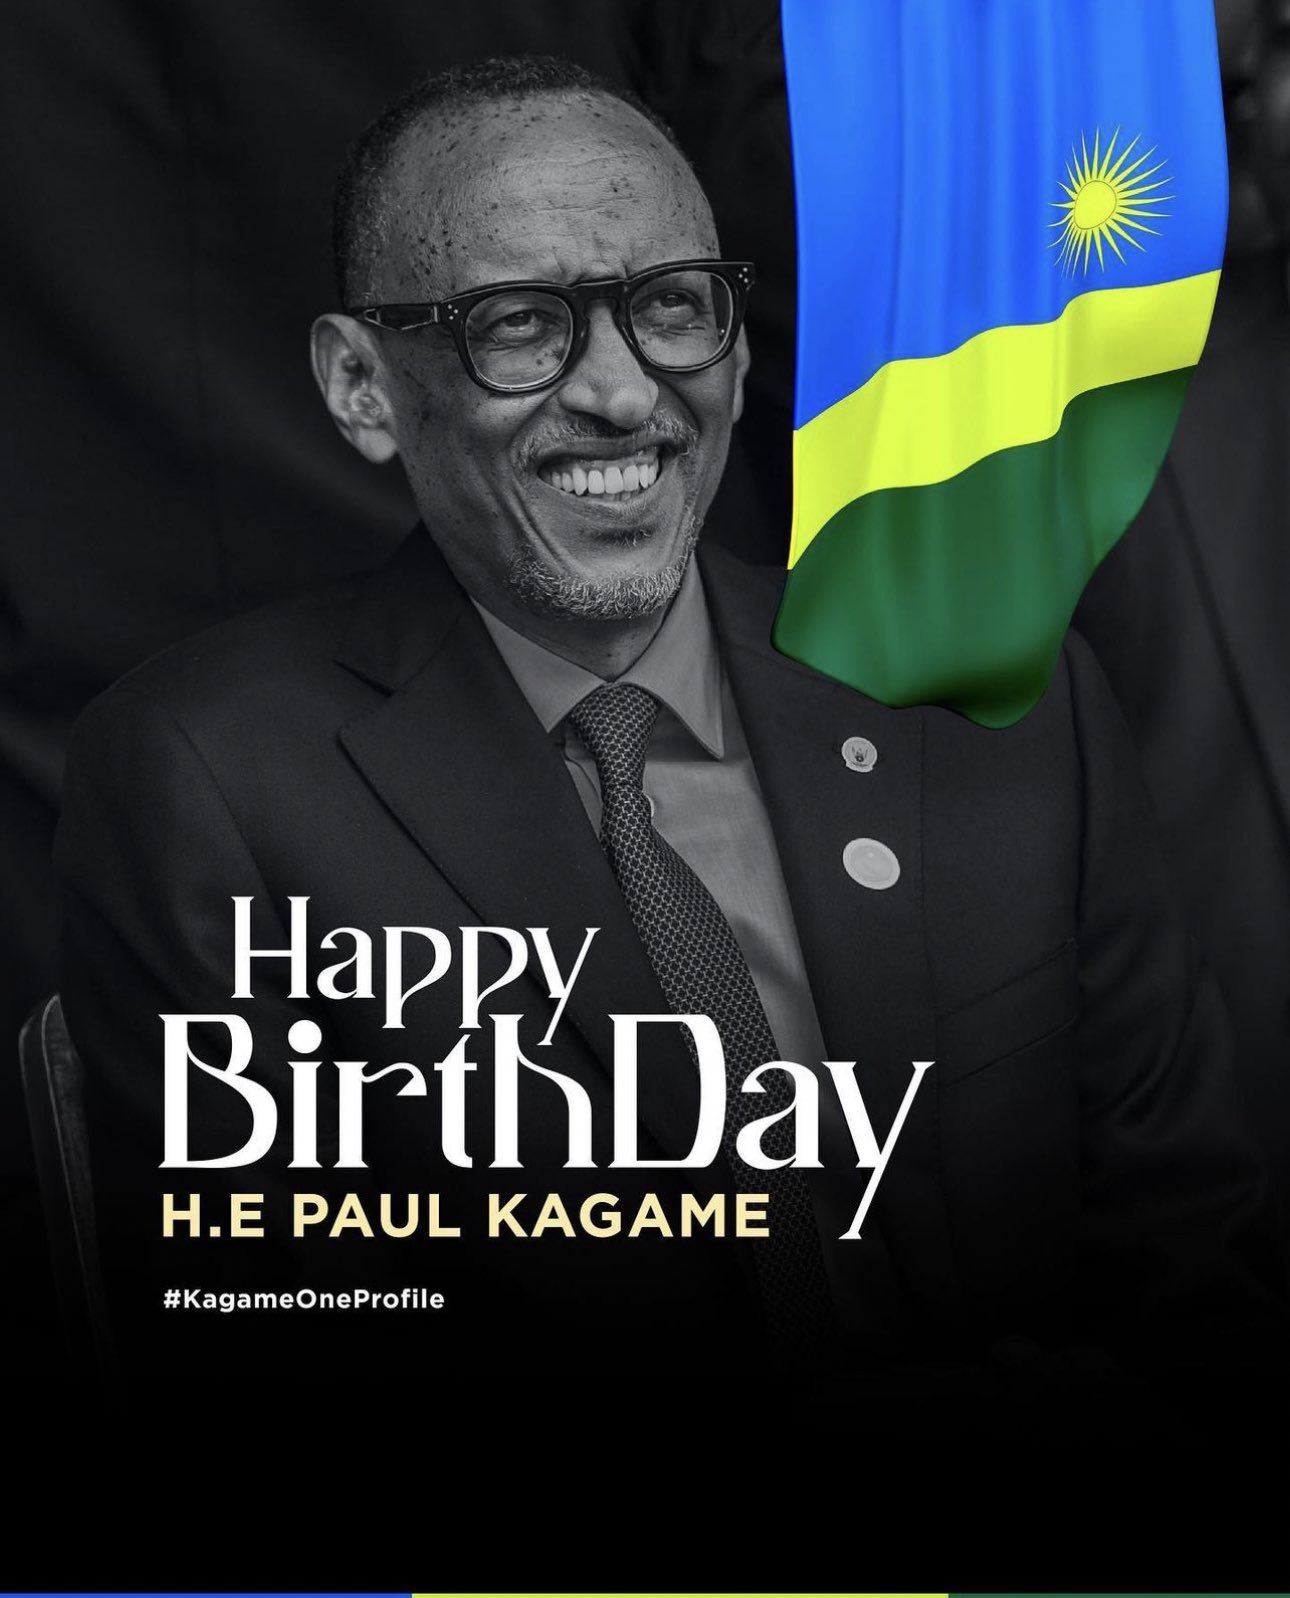 Happy Birthday H.E Paul kagame 